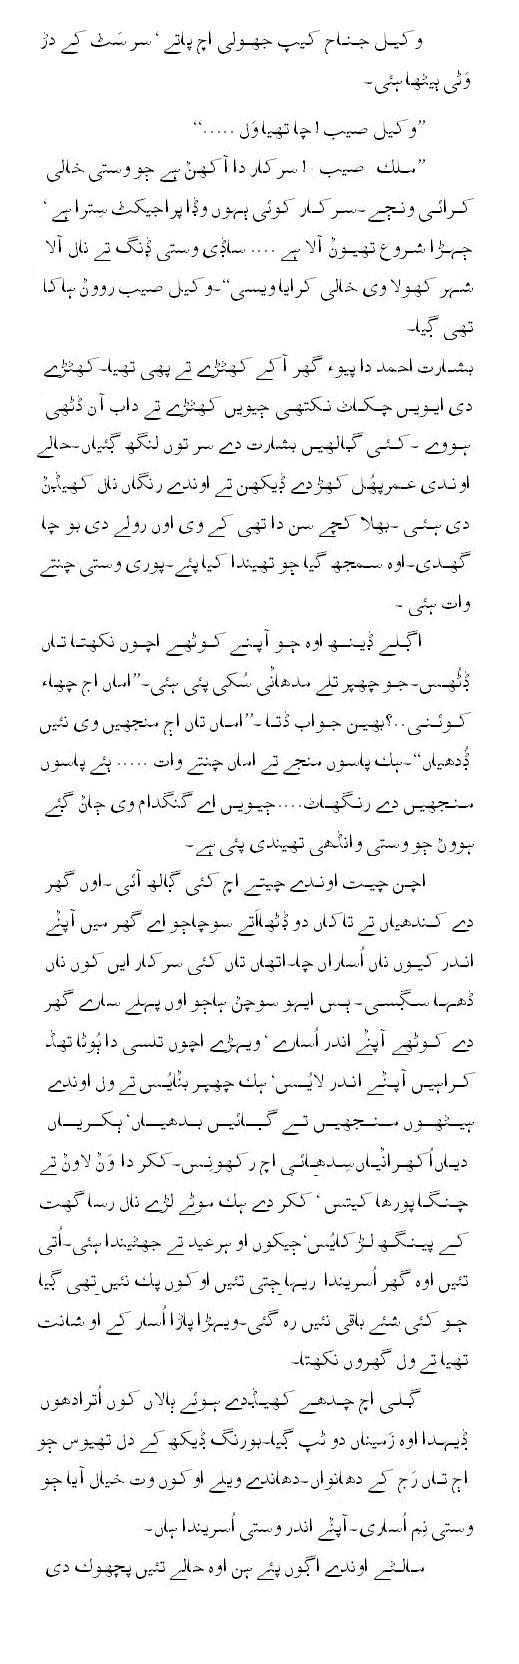 Dding (Hamid Siraj/ Translator Saeed Akhtar Zia) - Part 2